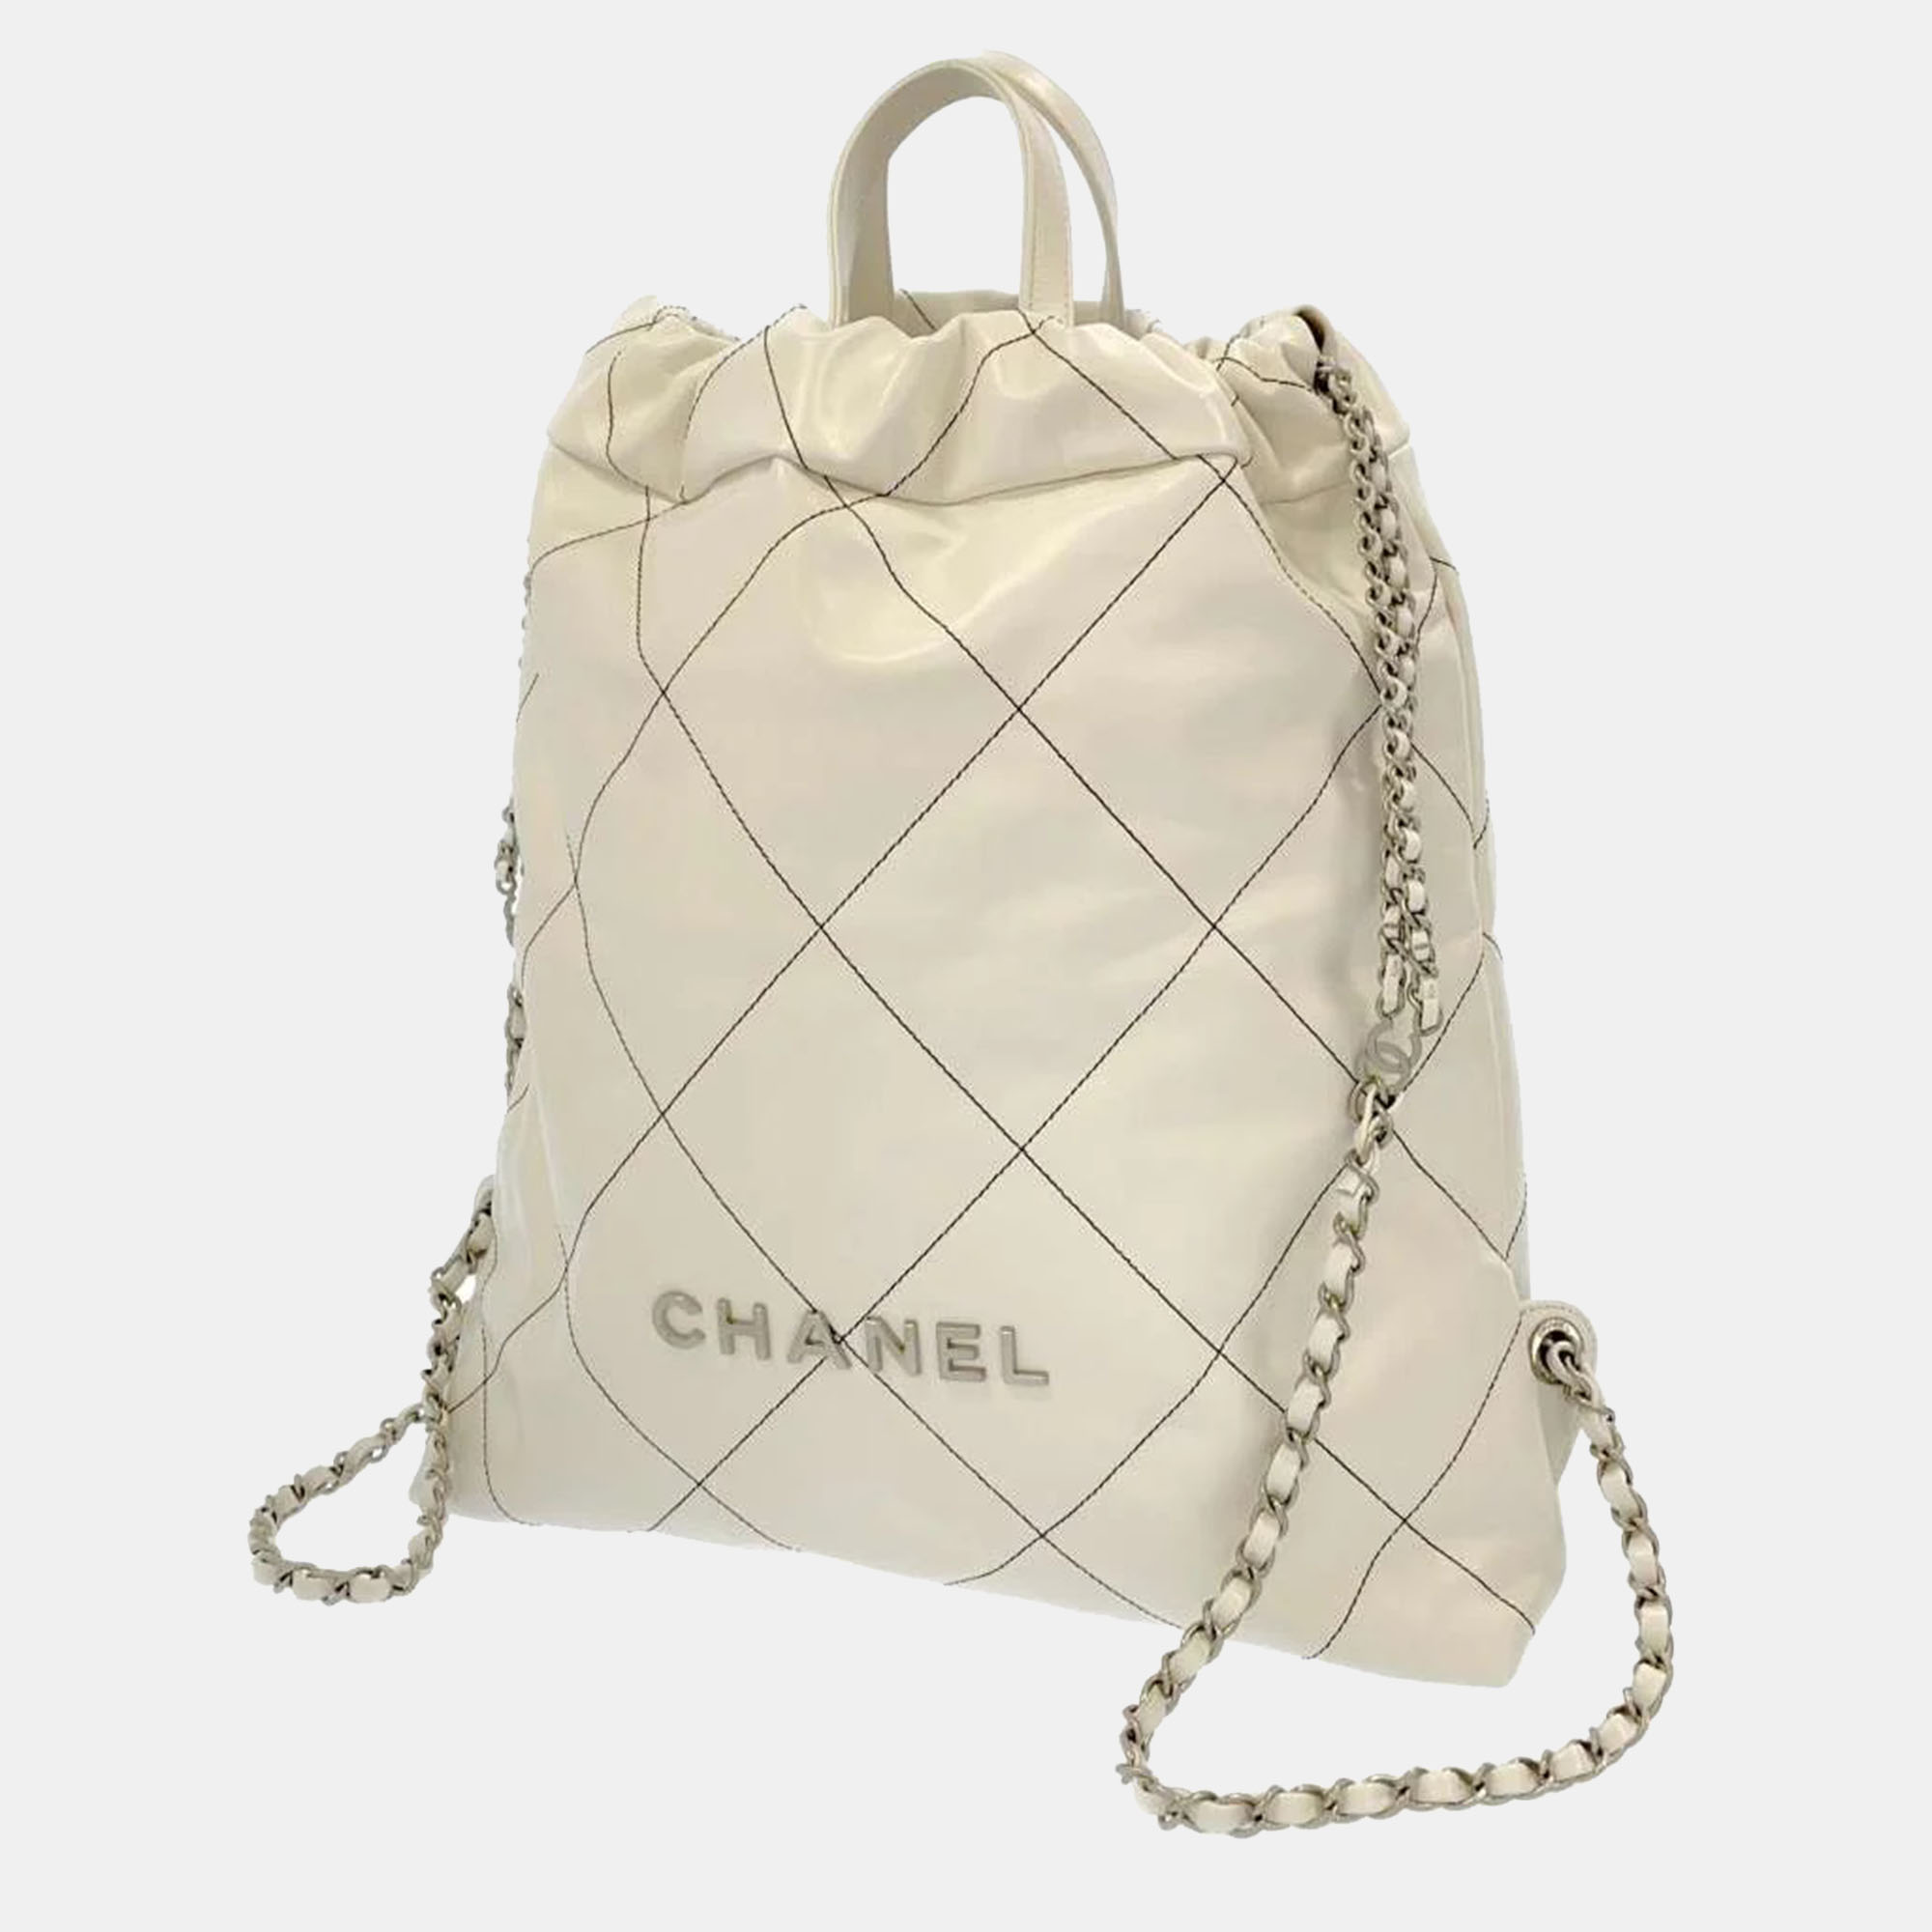 Chanel Large 22 Hobo Bag in White